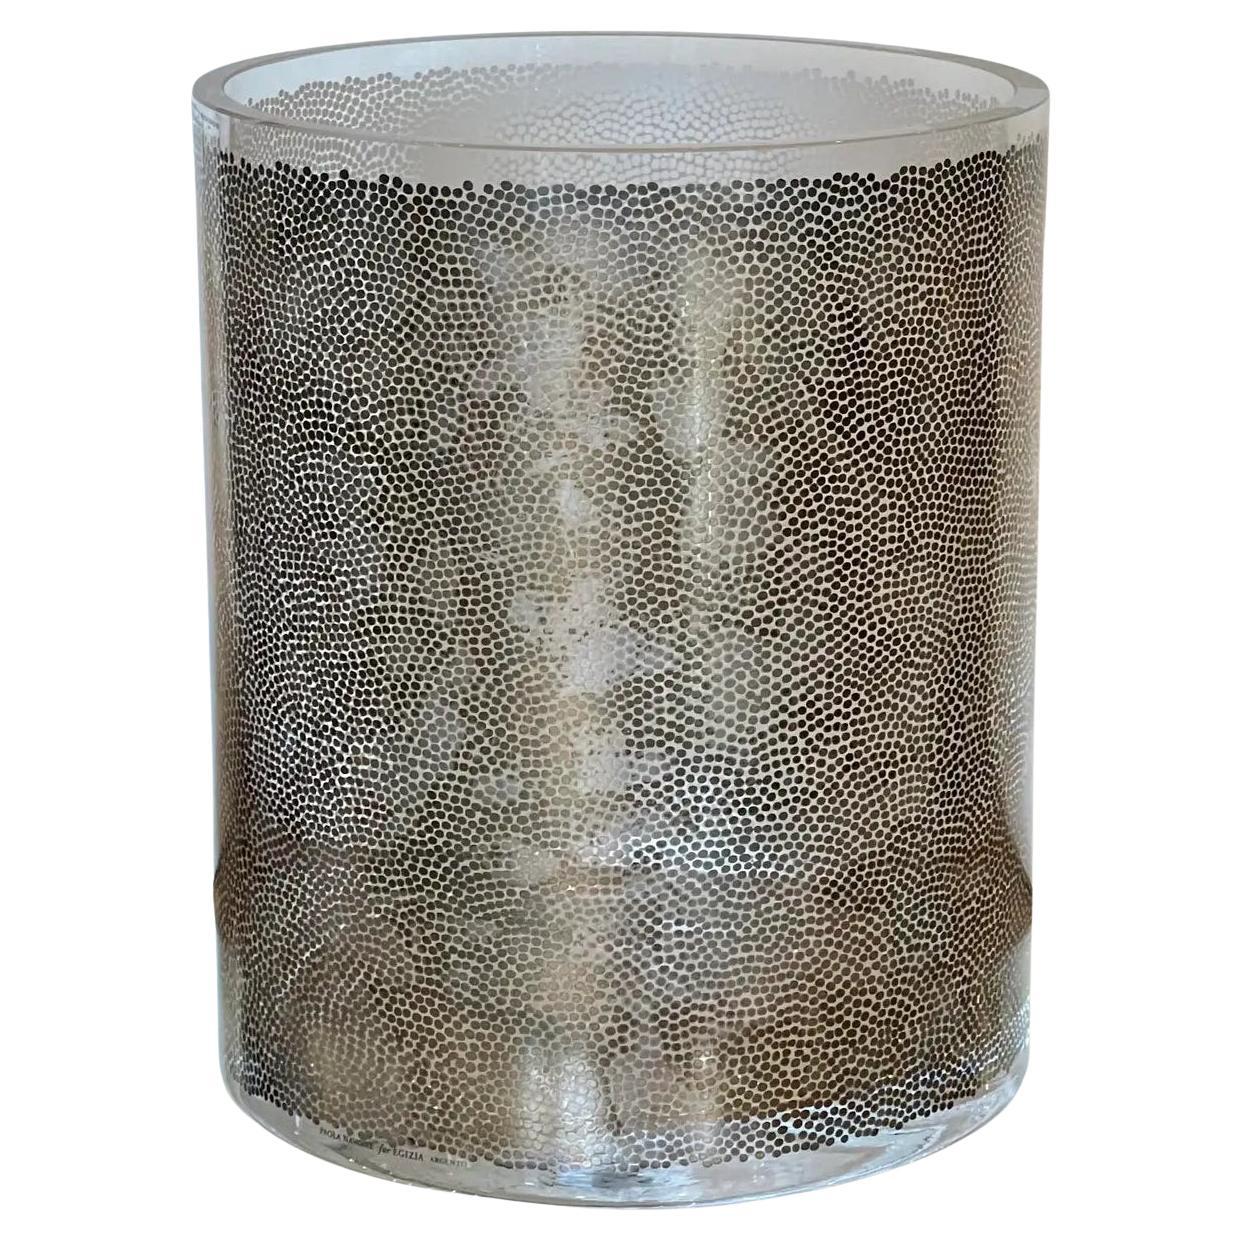 Barrel Form Paola Navone Egizia Italian Art Glass Vase